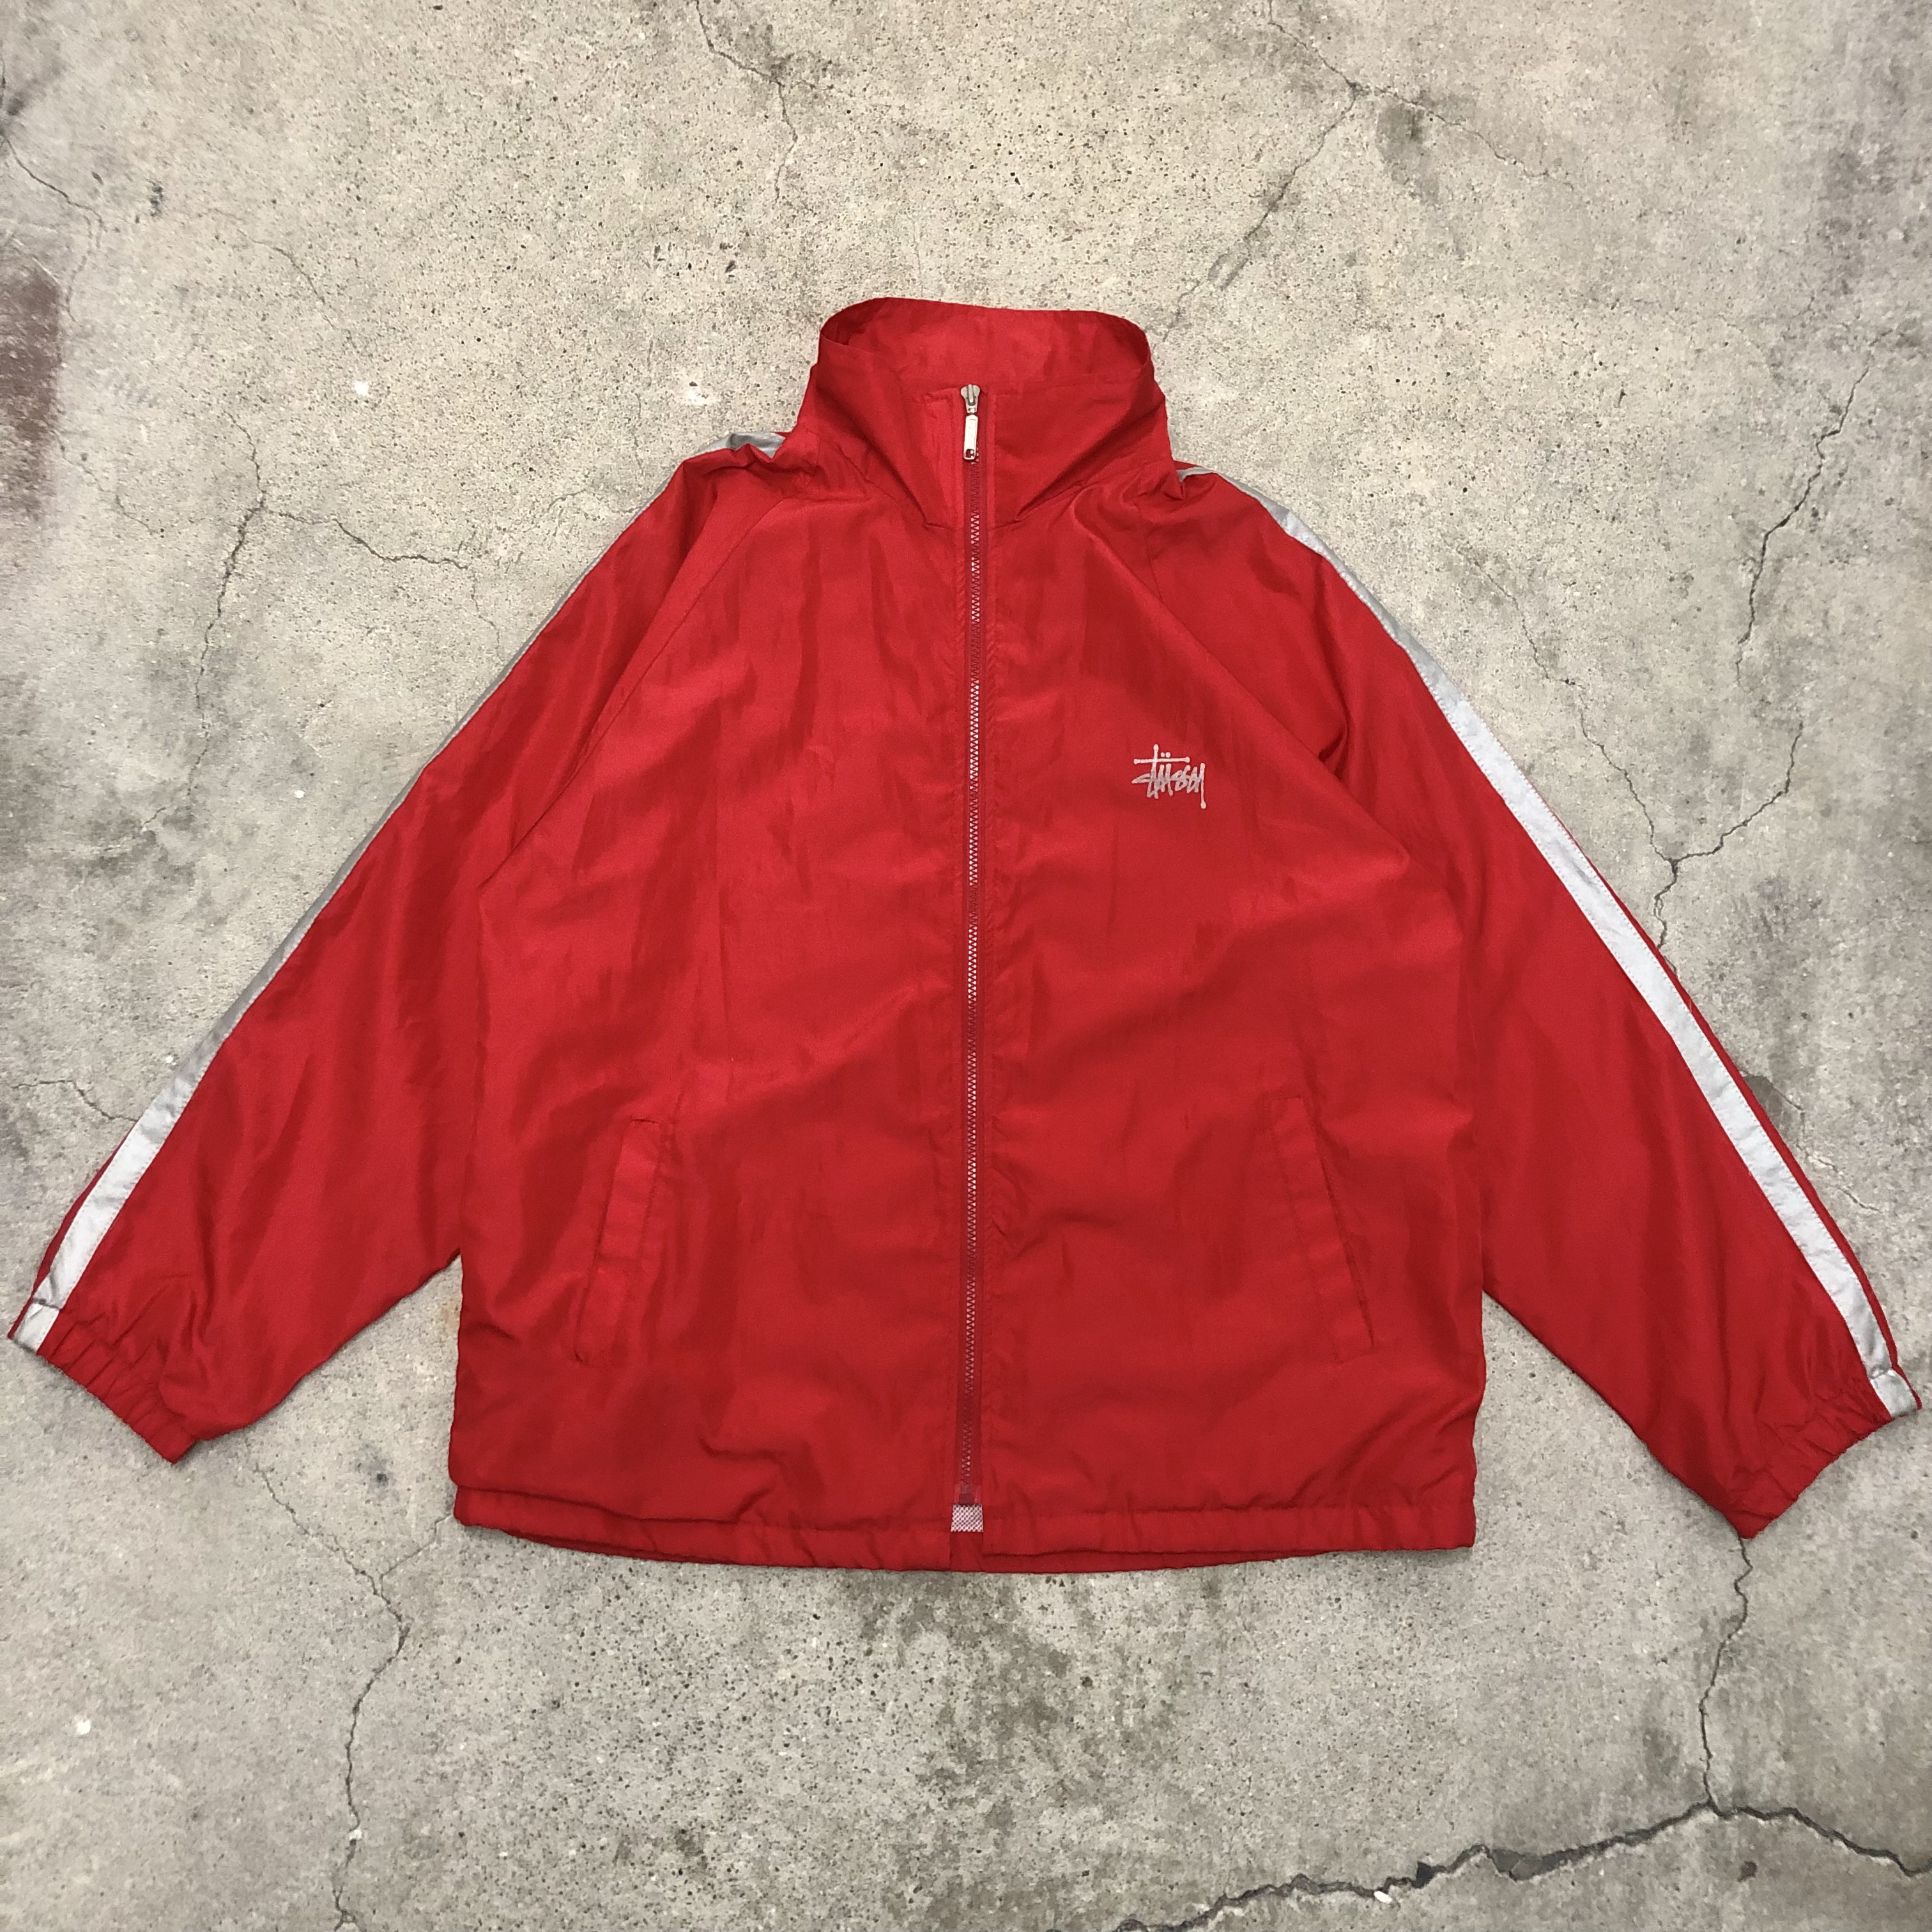 Old Stussy 90s 80s nylon jacket